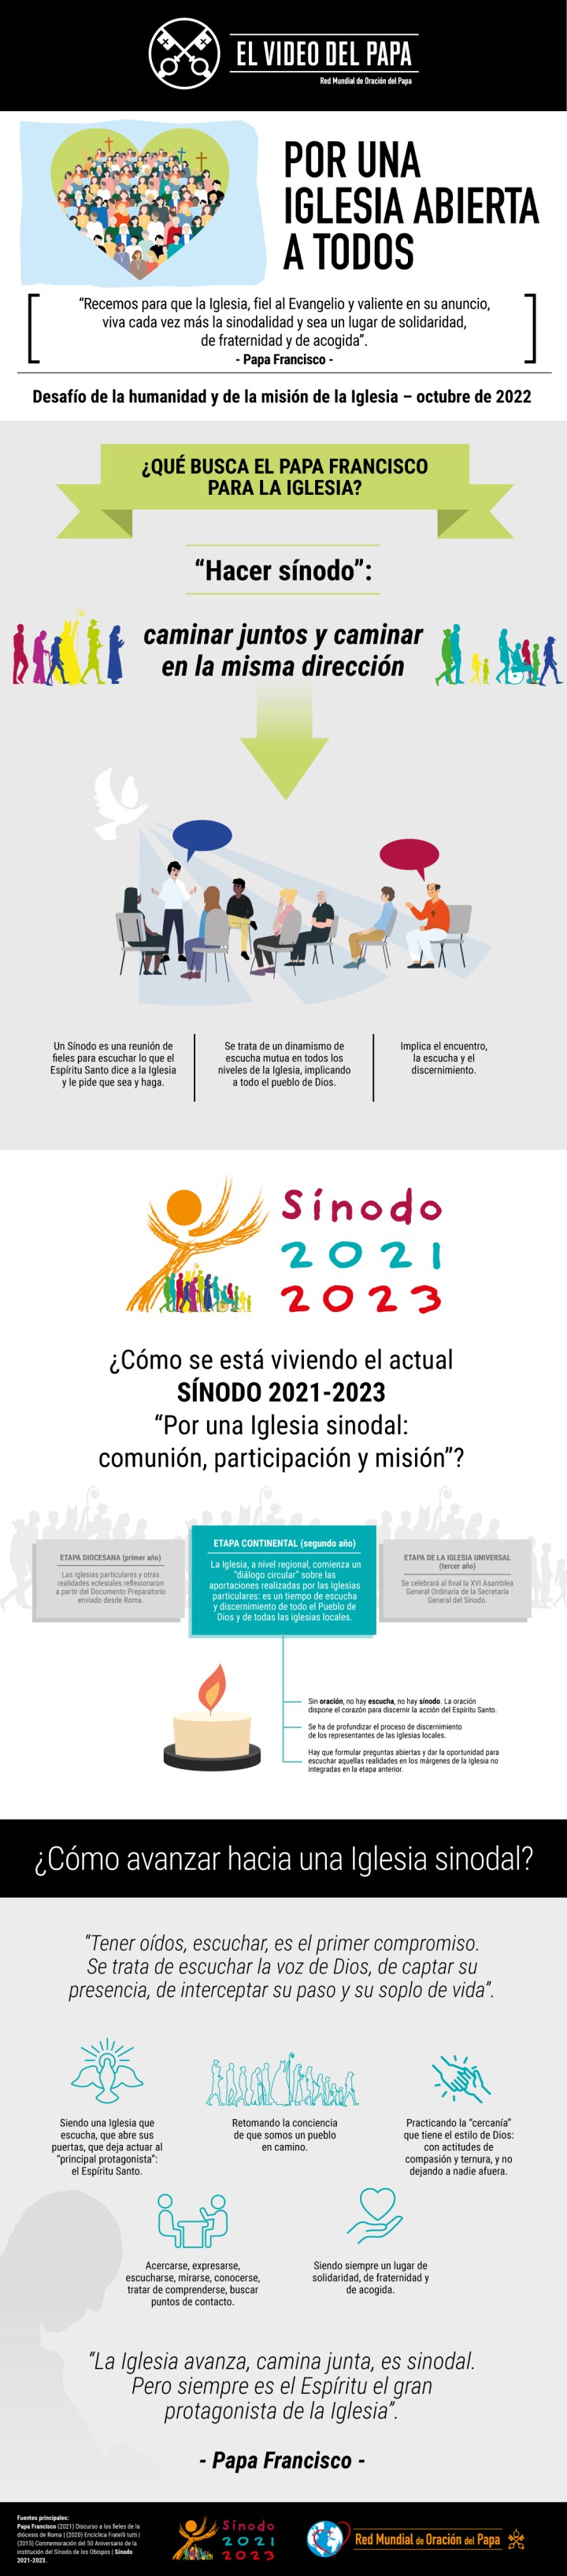 Infographic-TPV-10-2022-ES-Por-una-Iglesia-abierta-a-todos.jpg